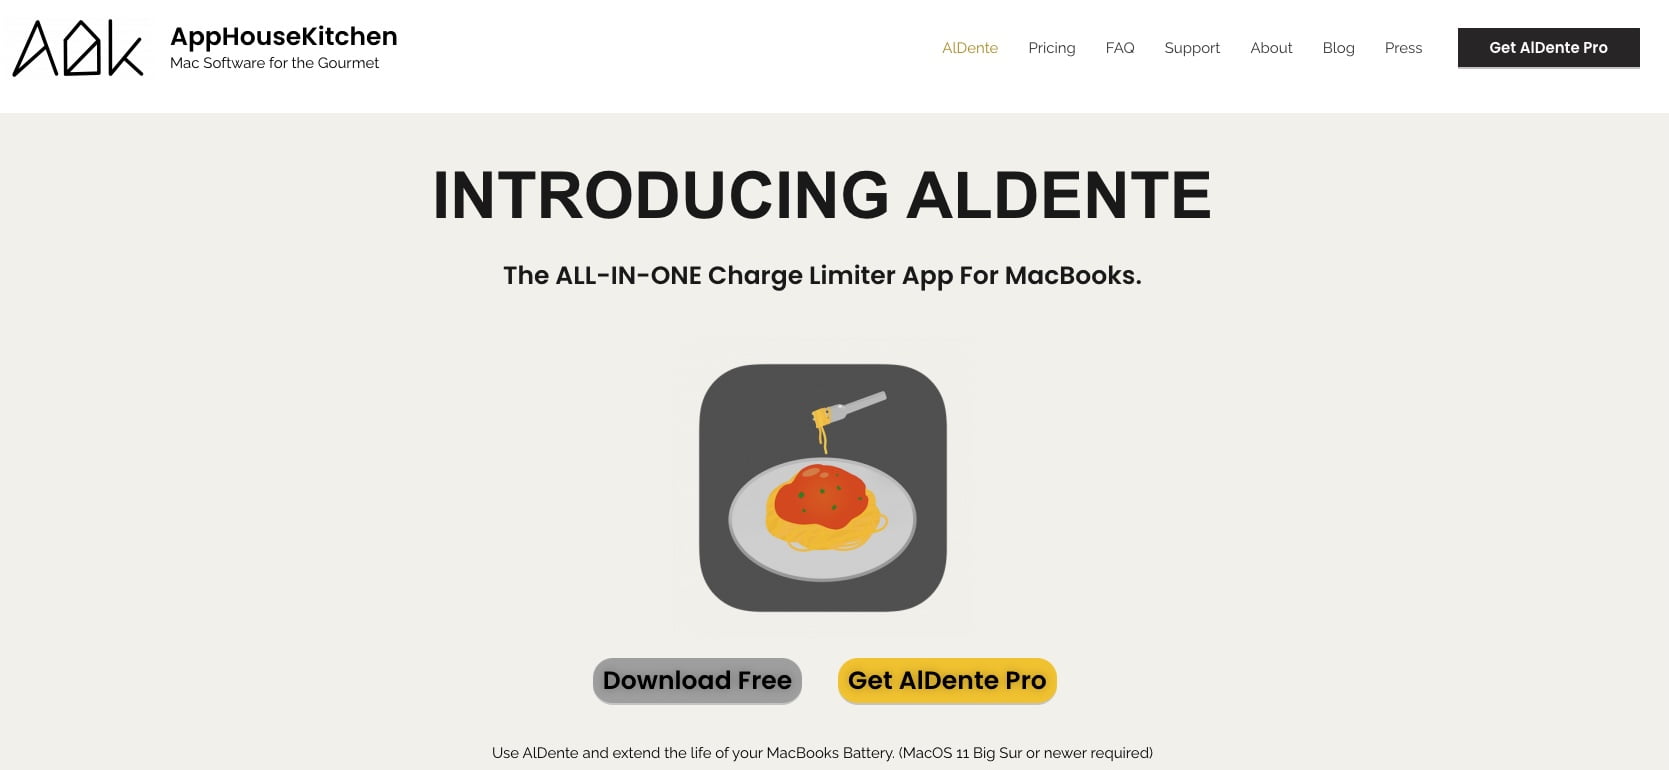 download the last version for apple AlDente Pro